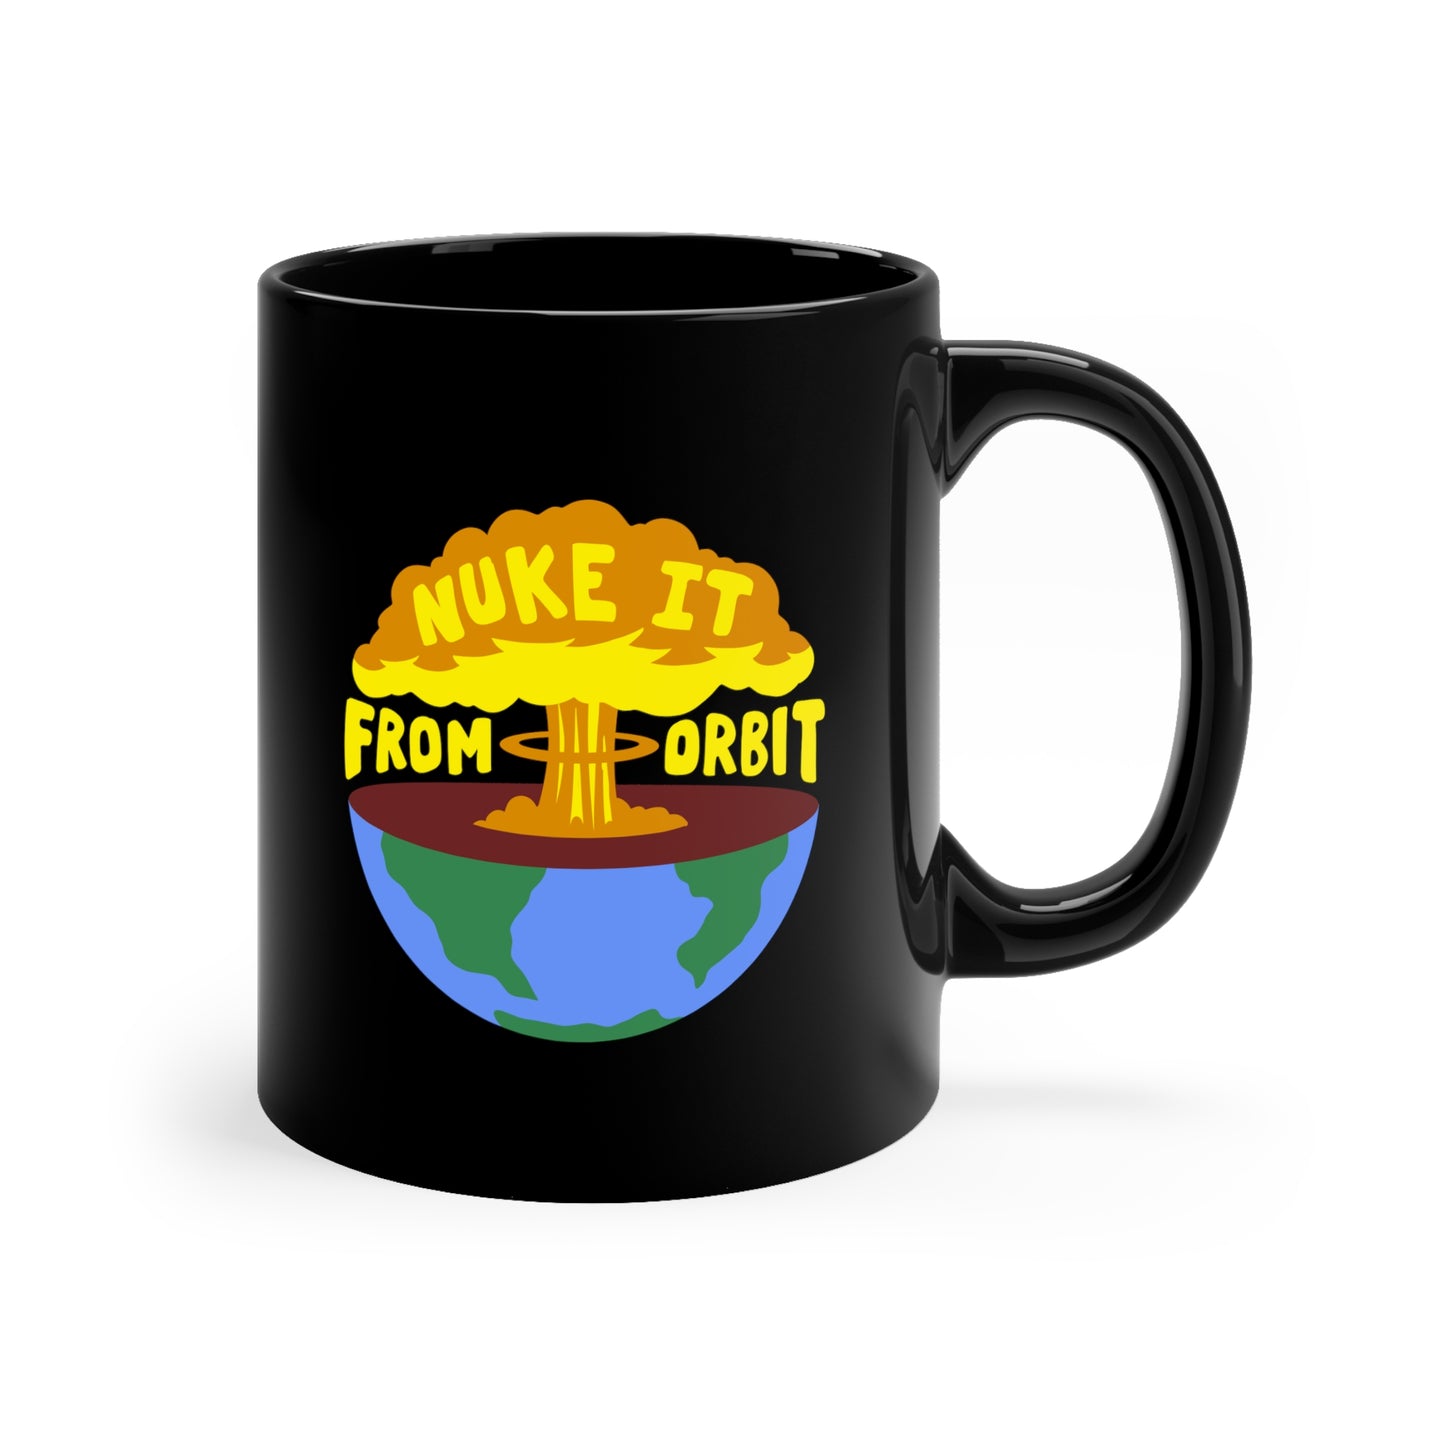 Nuke It From Orbit ceramic mug